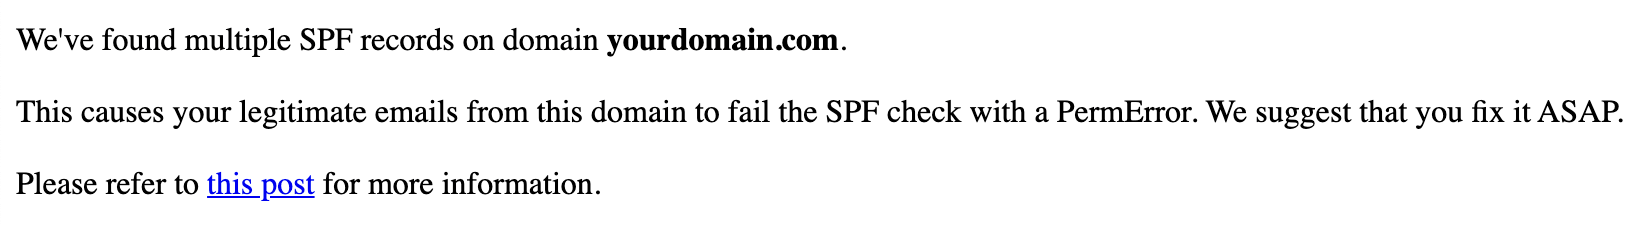 Multiple SPF Records on Domain Warning